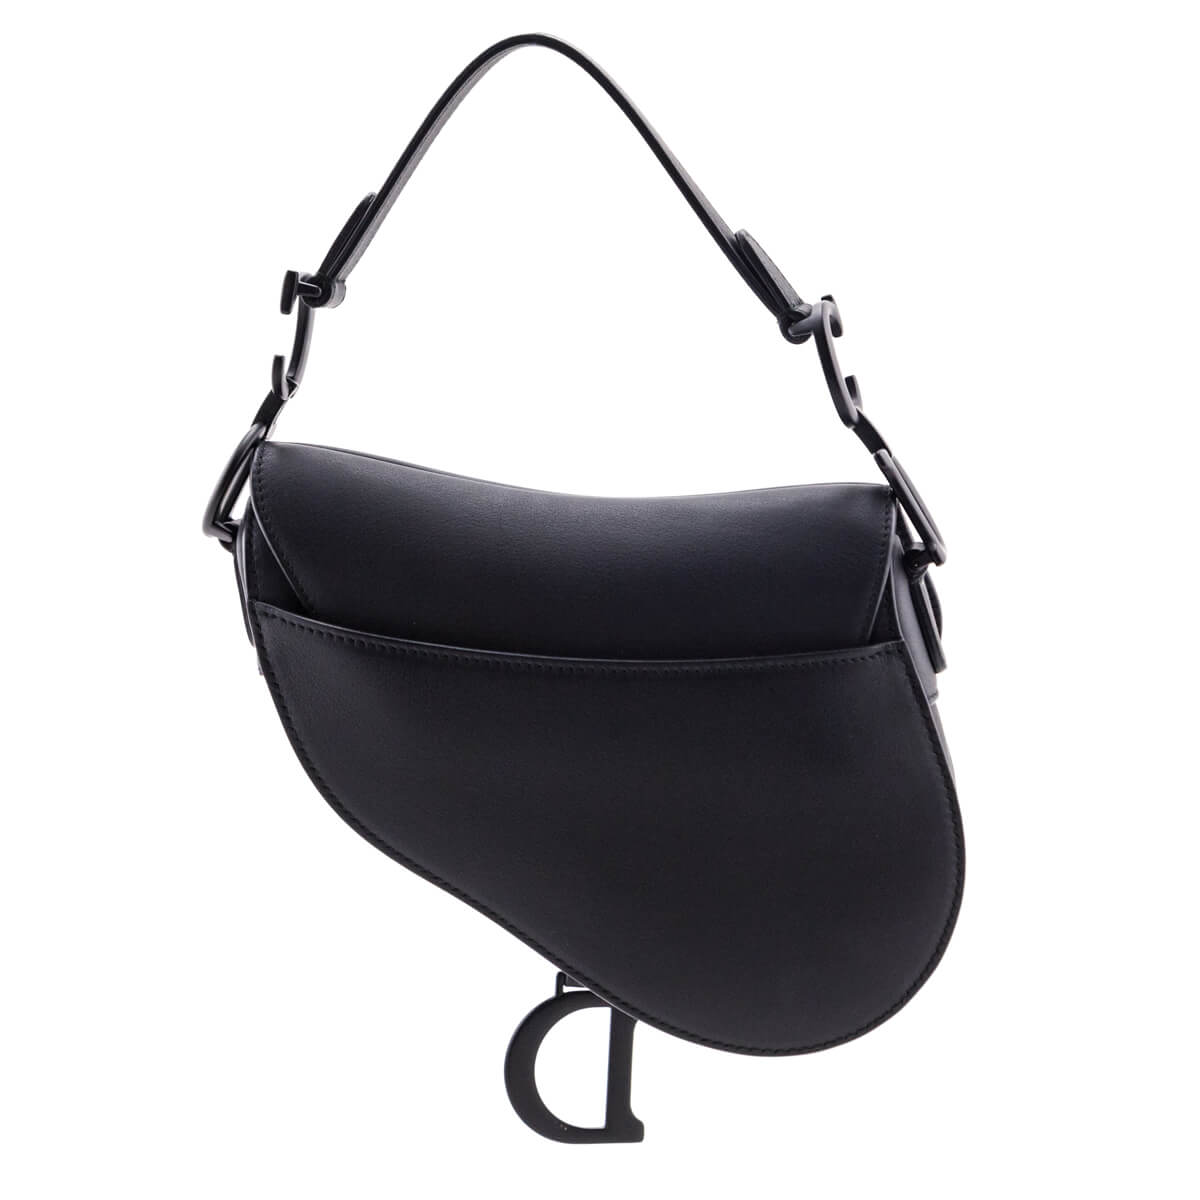 dior saddle bag black and white